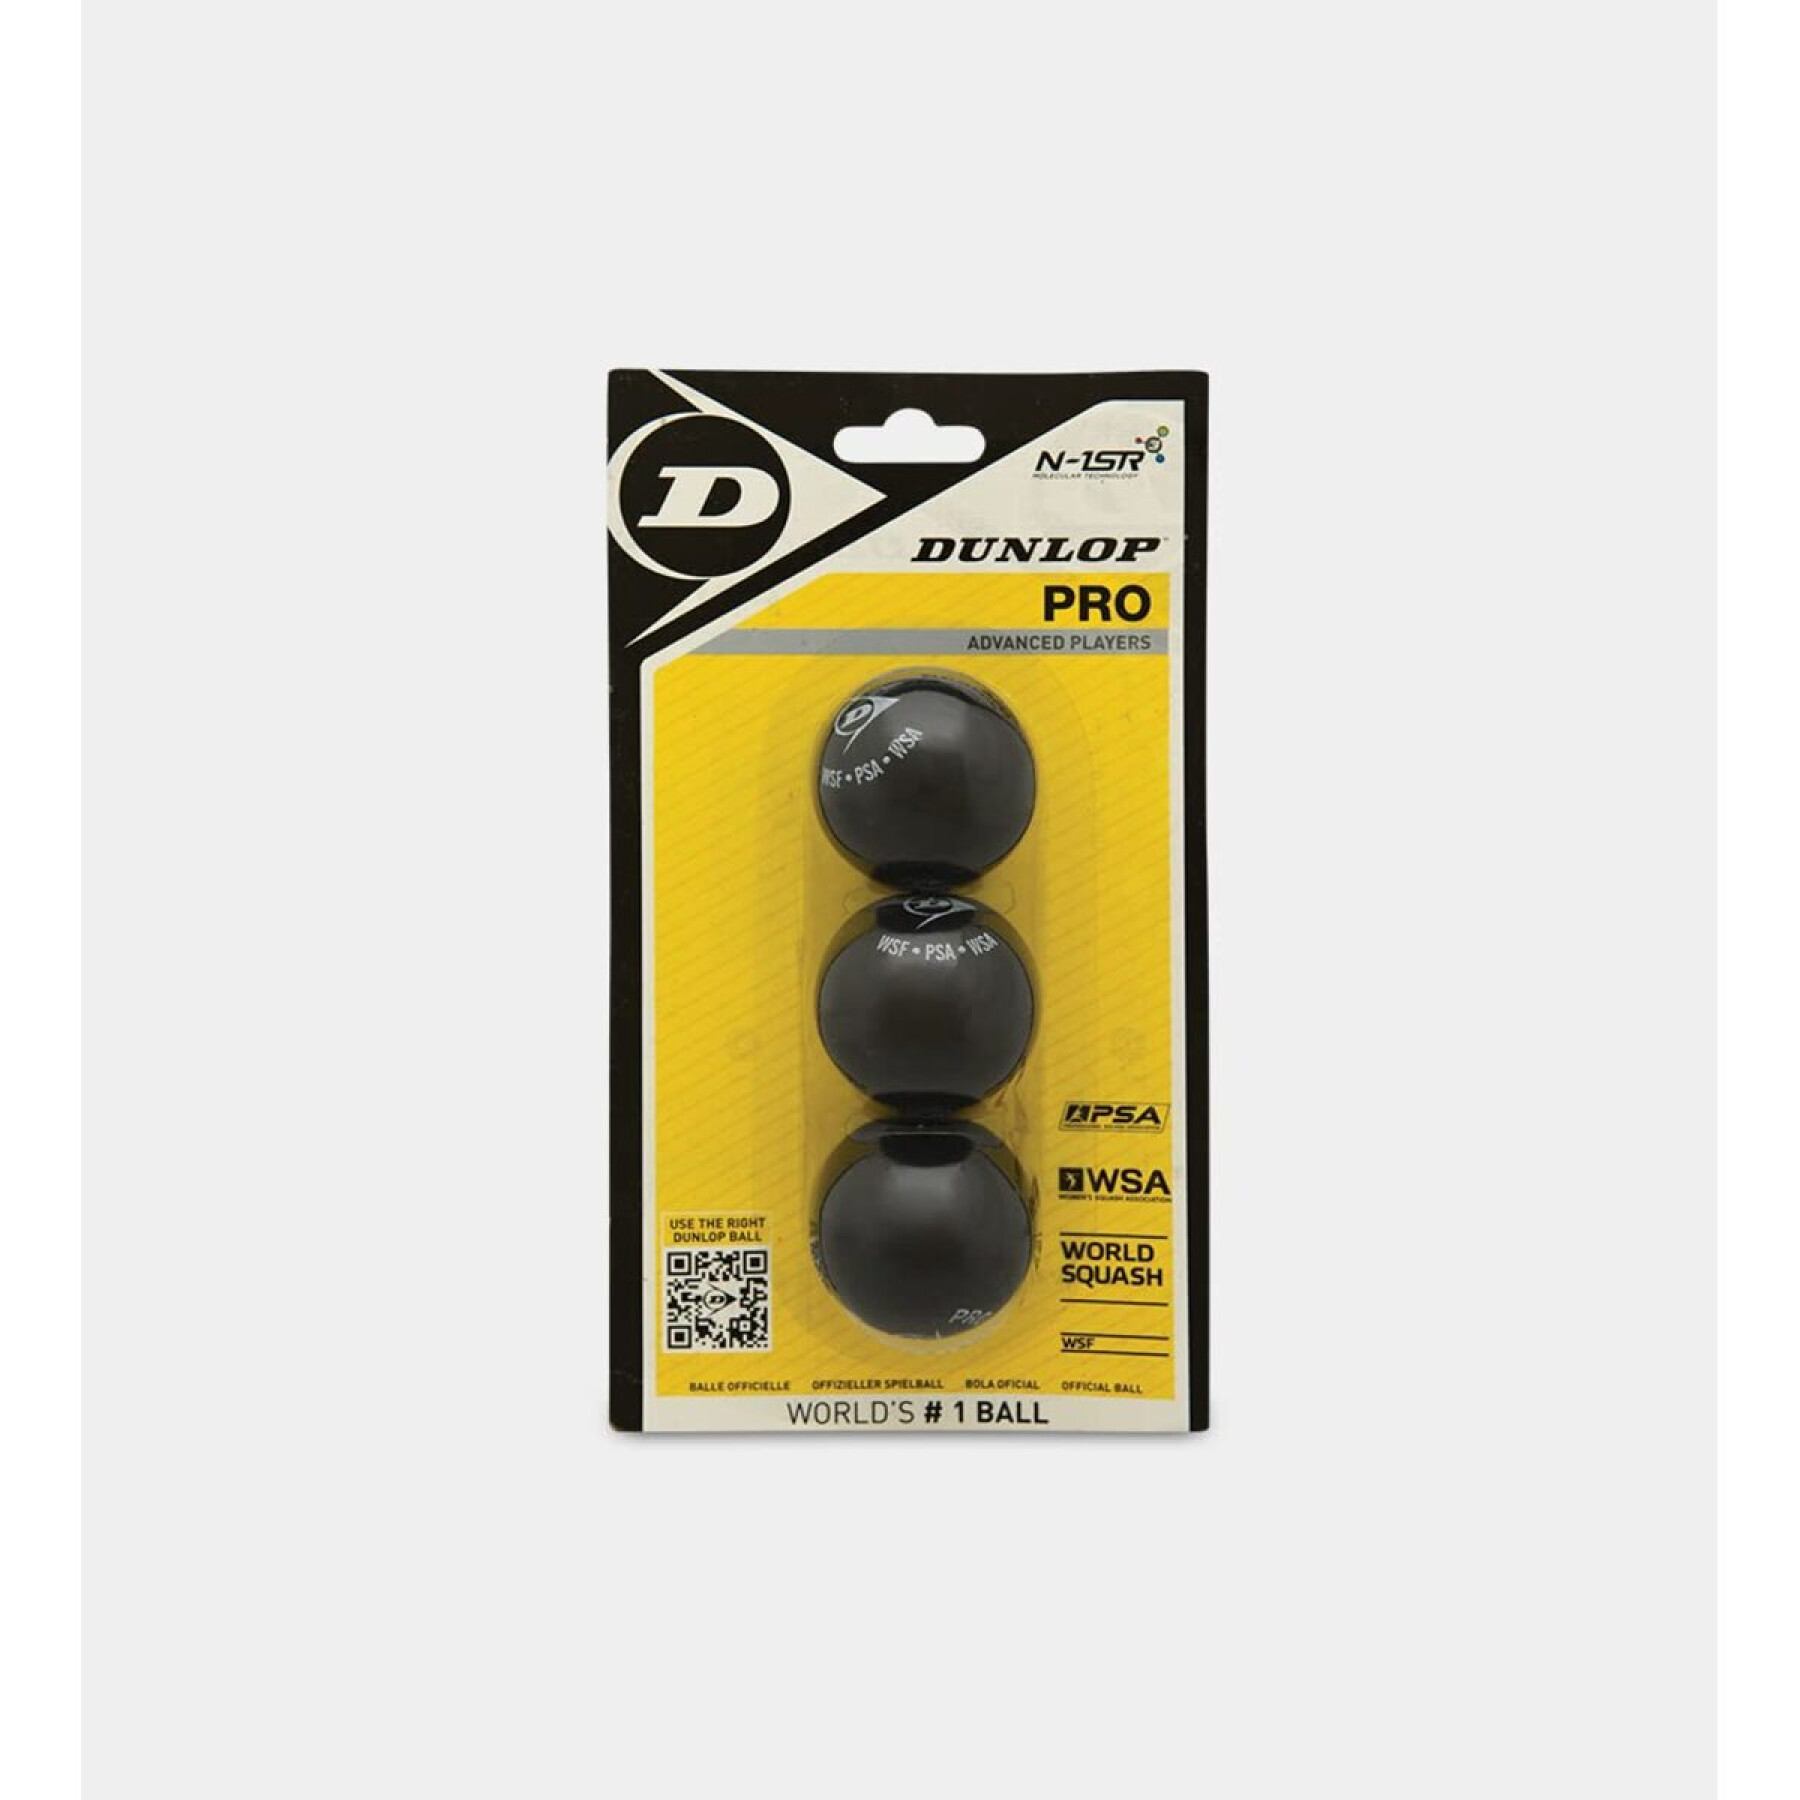 Set of 3 squash balls Dunlop pro blister